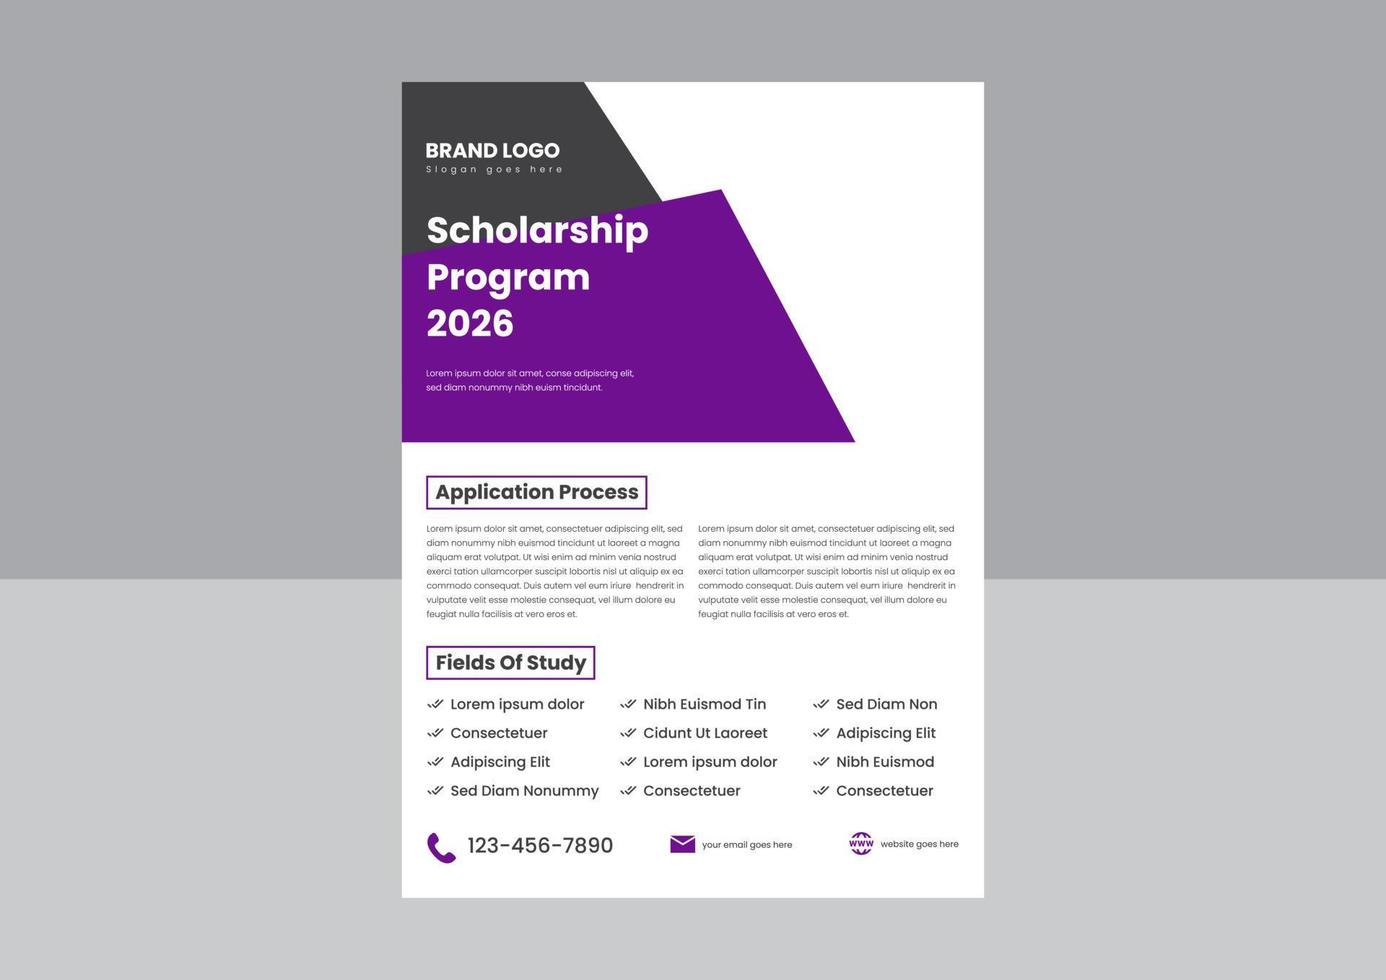 scholarship opportunities flyer poster template design. international scholarship flyer design template. vector